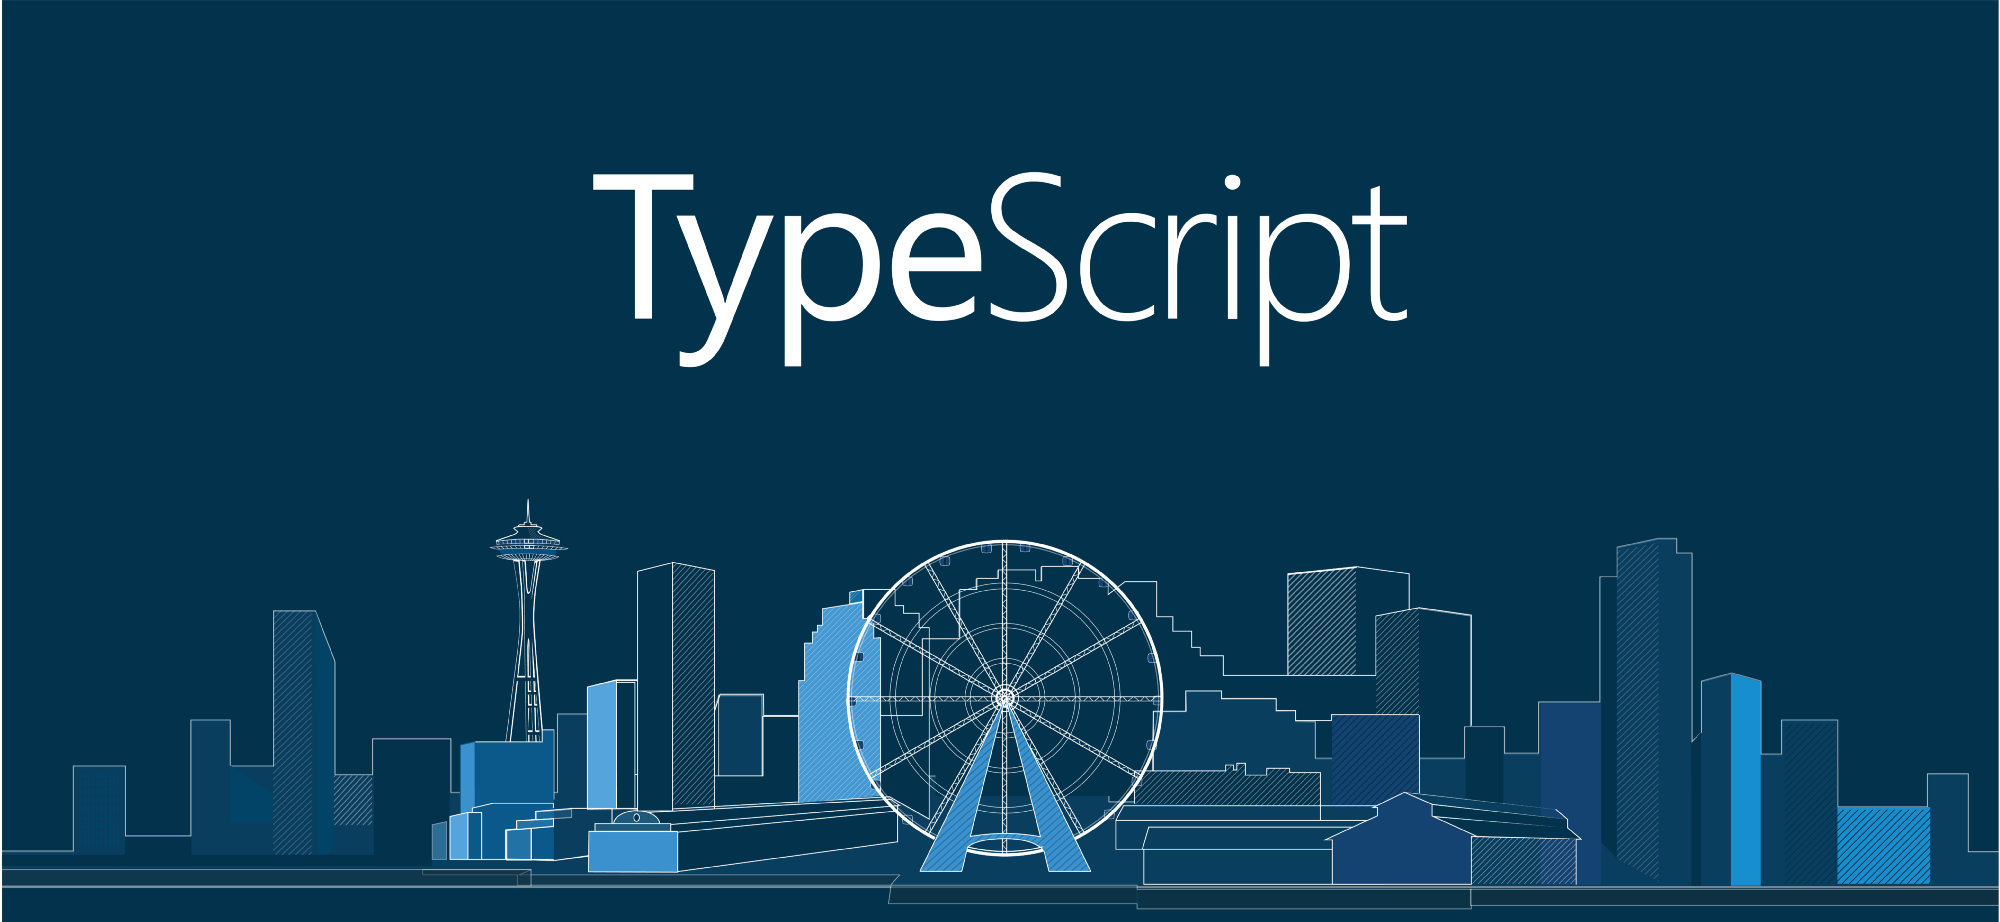 typescript wallpaper